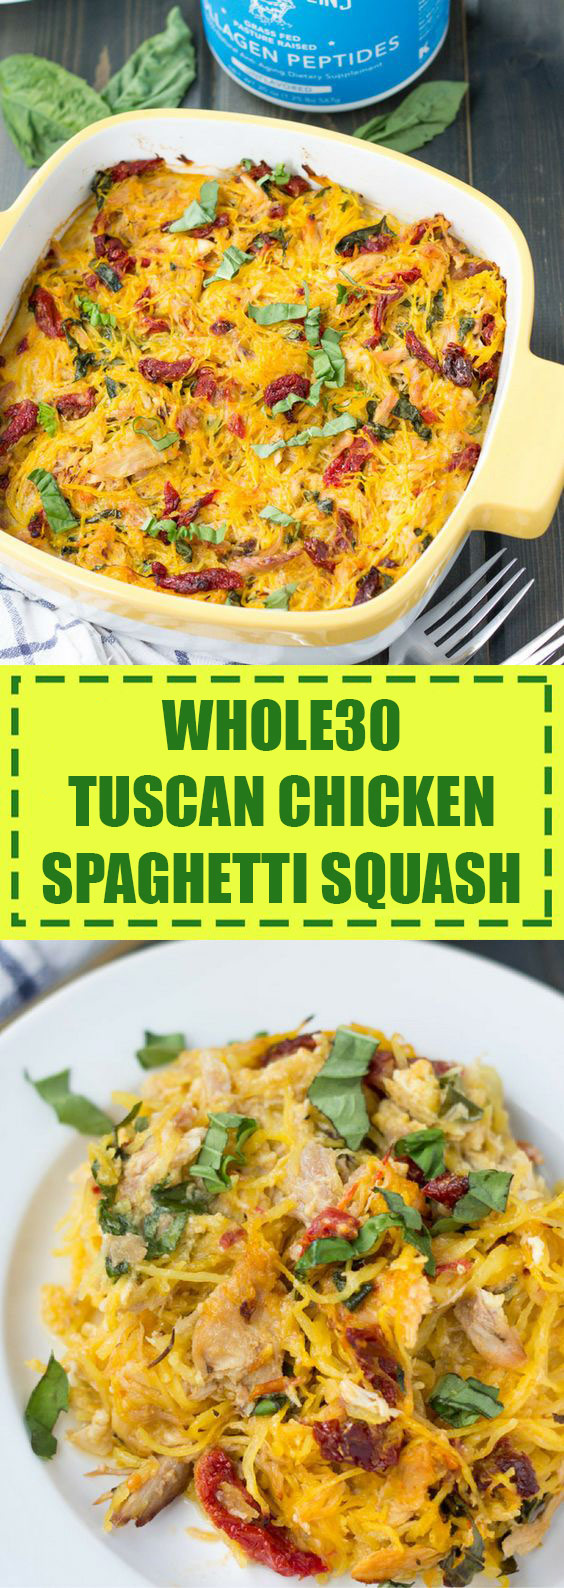 Whole30 Tuscan Chicken Spaghetti Squash